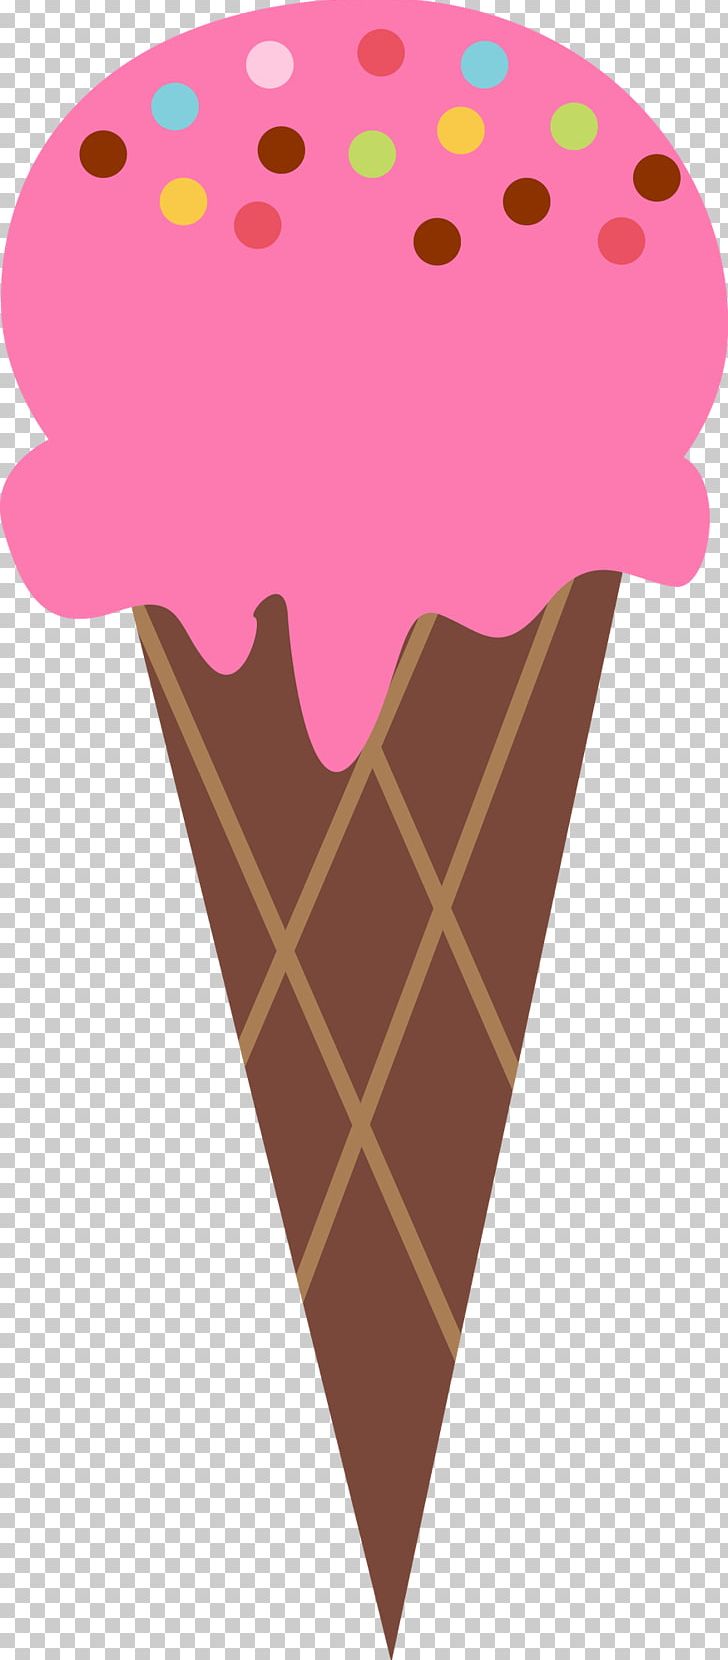 Ice Cream Cones Chocolate Ice Cream Strawberry Ice Cream PNG, Clipart, Chocolate Ice Cream, Chocolate Ice Cream, Cones, Cream, Food Free PNG Download